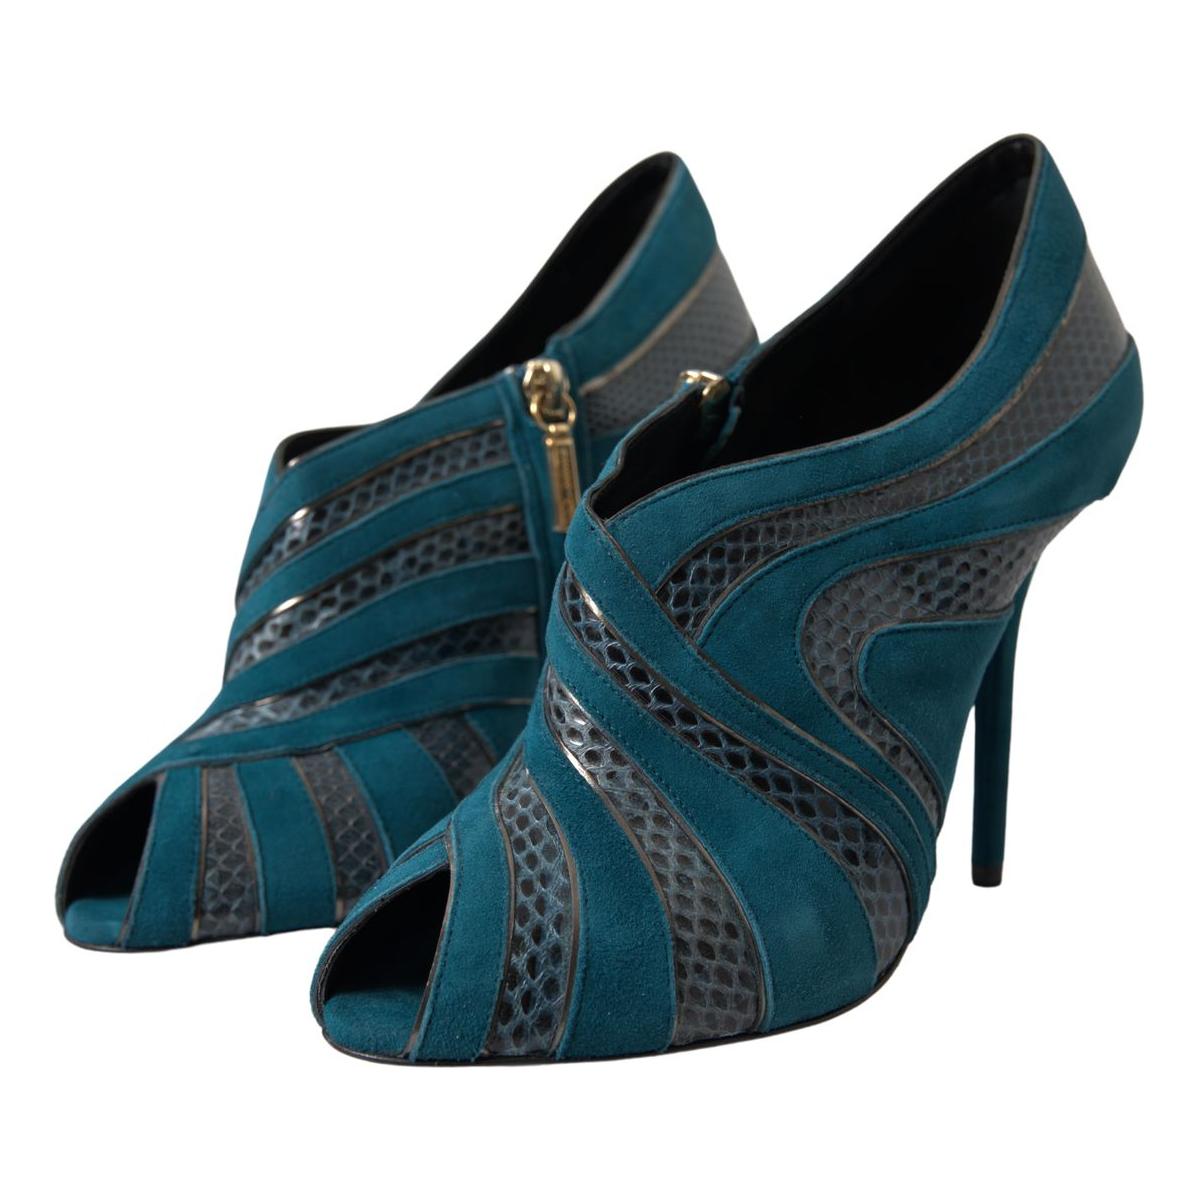 Dolce & Gabbana Chic Blue Peep Toe Stiletto Ankle Booties blue-teal-snakeskin-peep-toe-ankle-booties-shoes 465A8807-e158912d-122.jpg